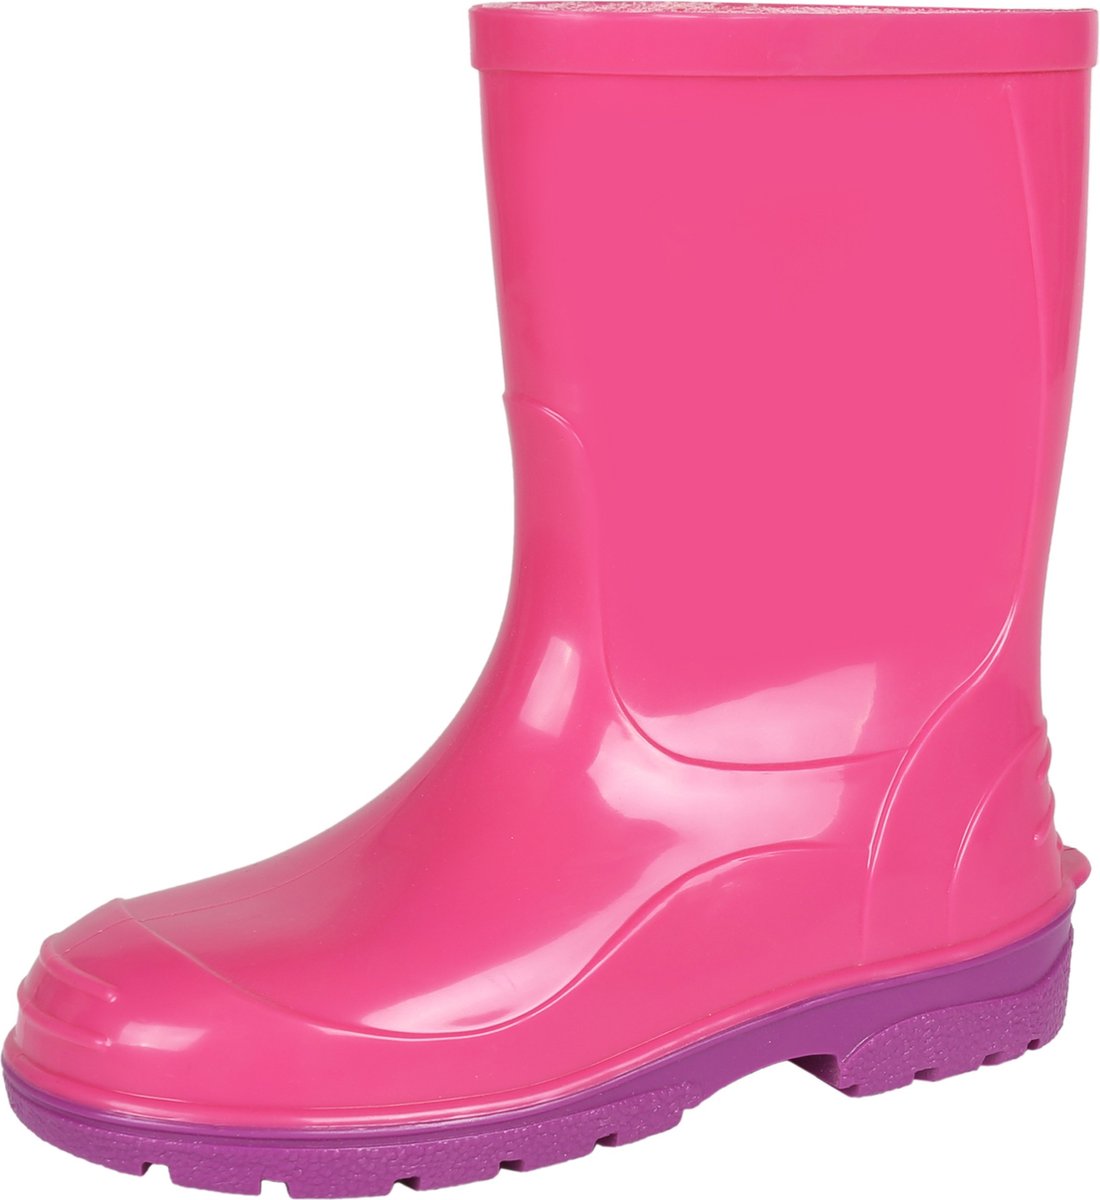 Roze laarzen met paarse zool - Ola LEMIGO / 26